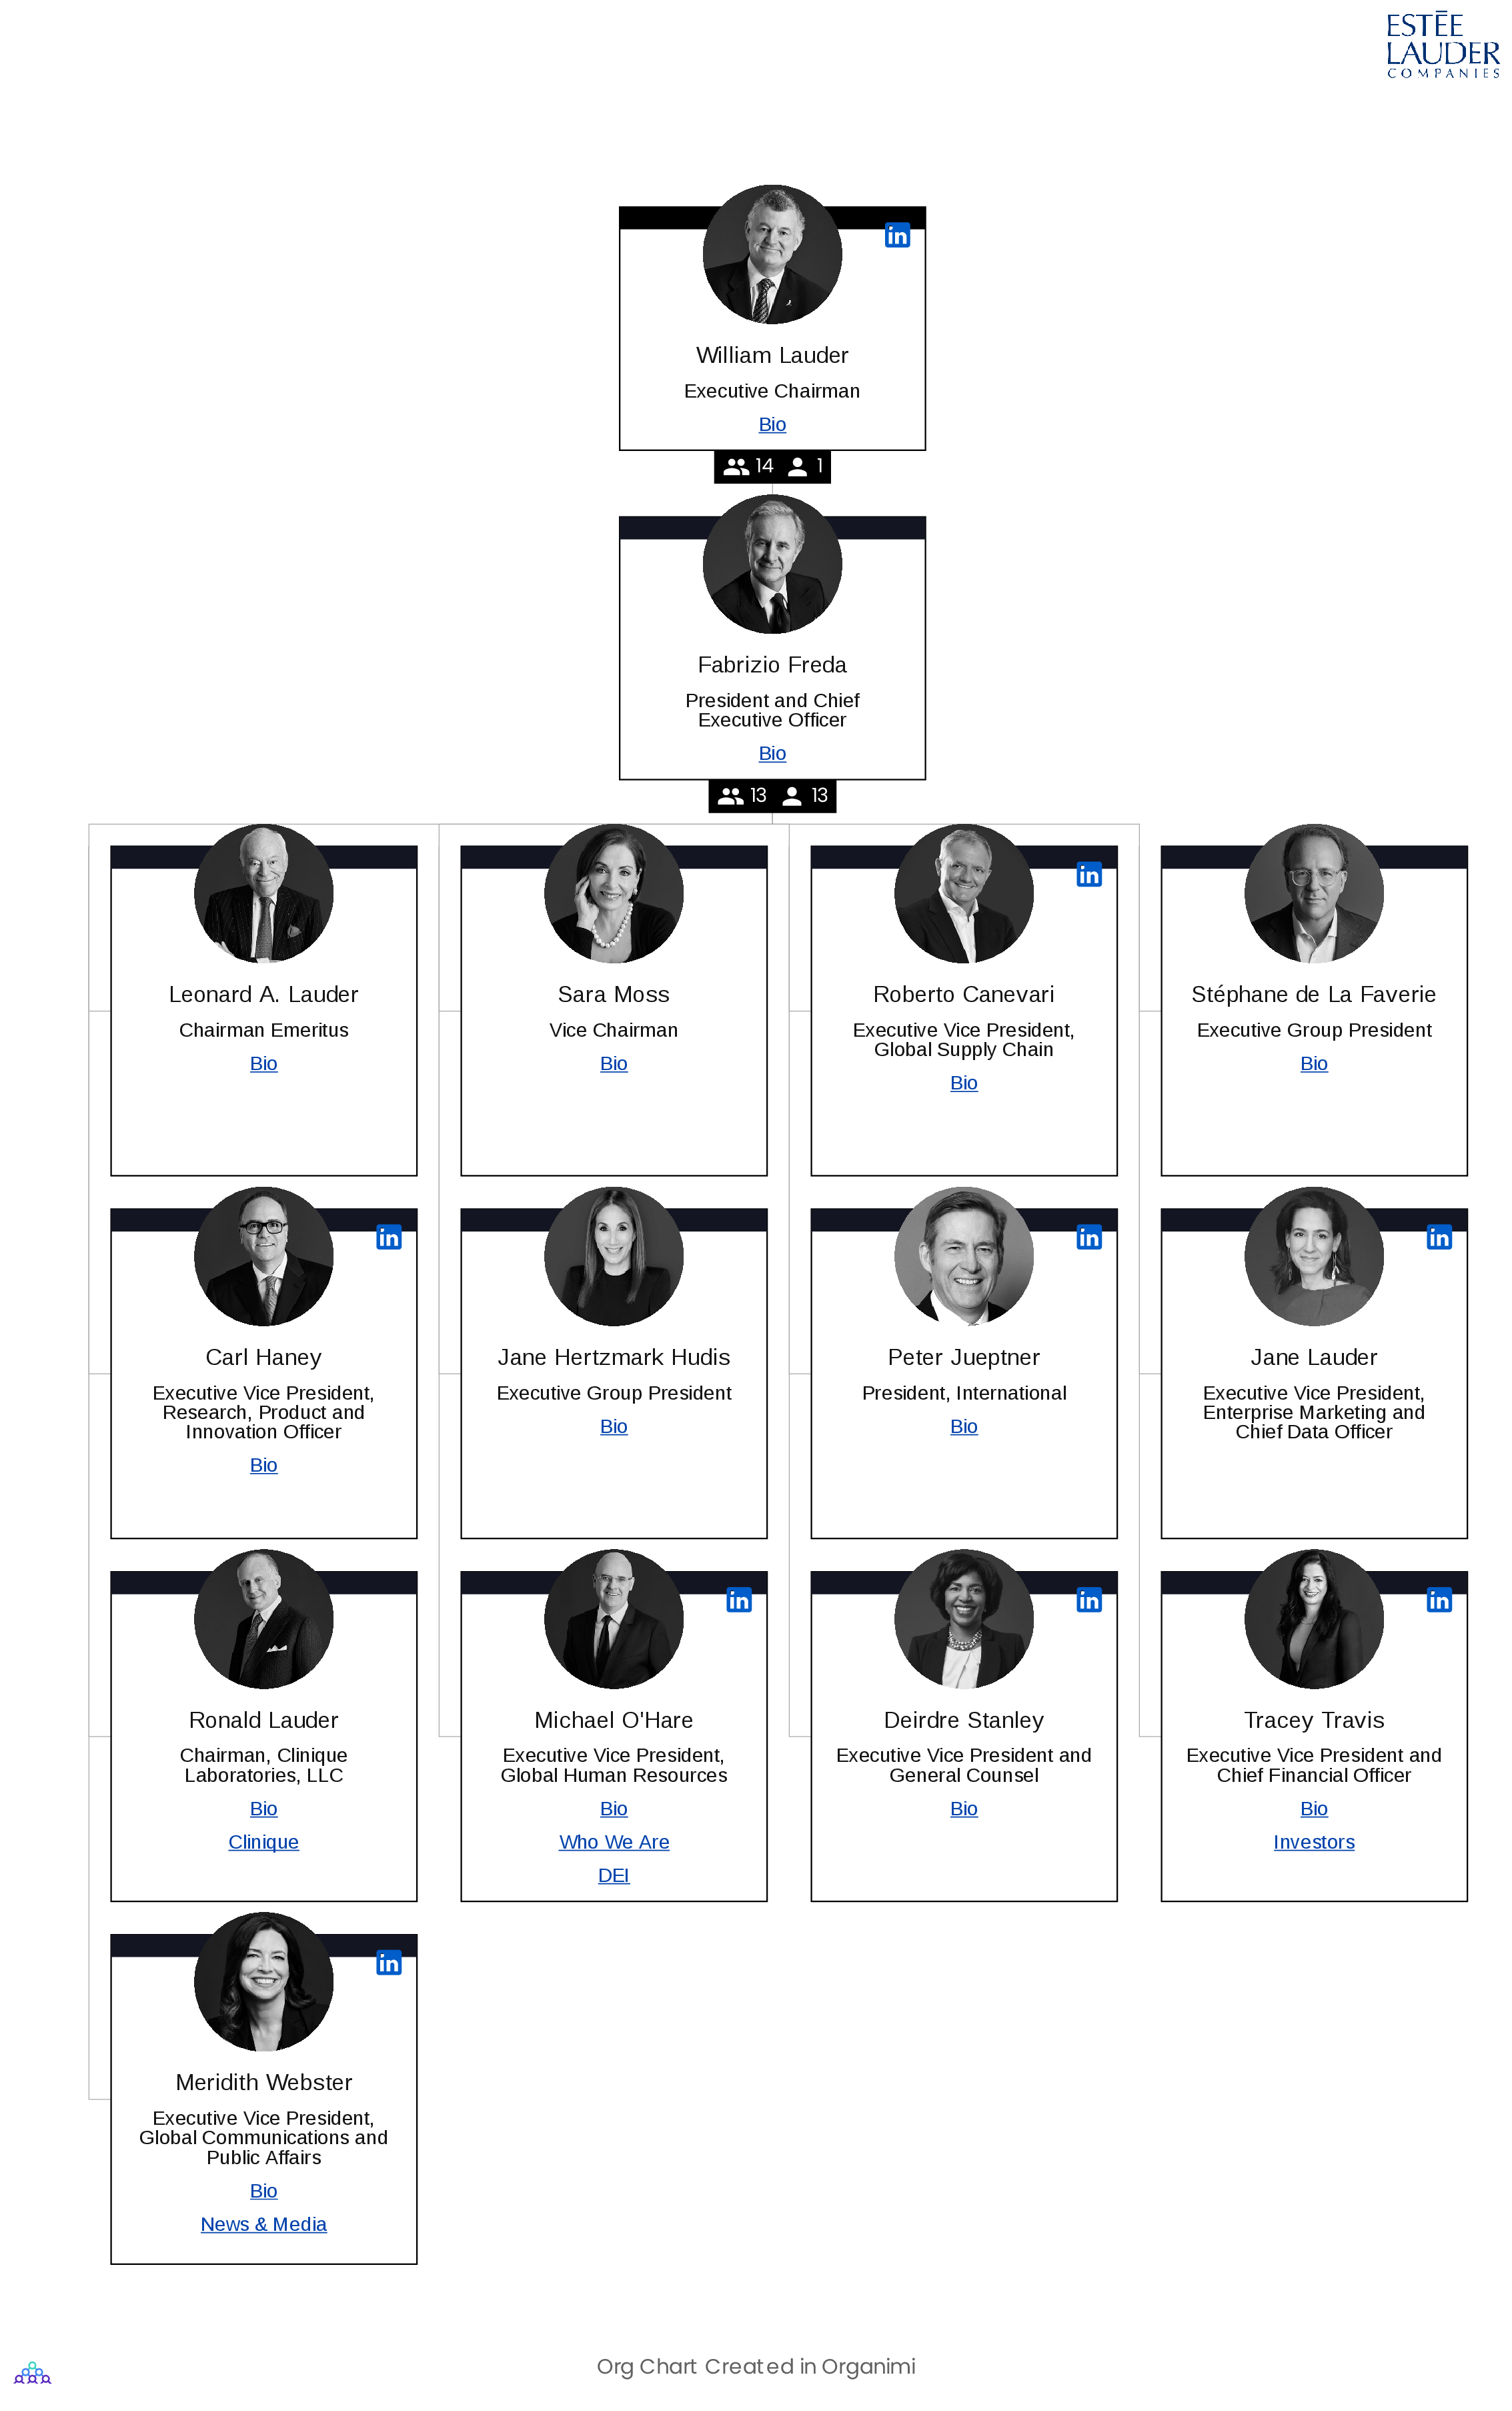 The Estée Lauder Companies - Org Chart, Teams, Culture & Jobs